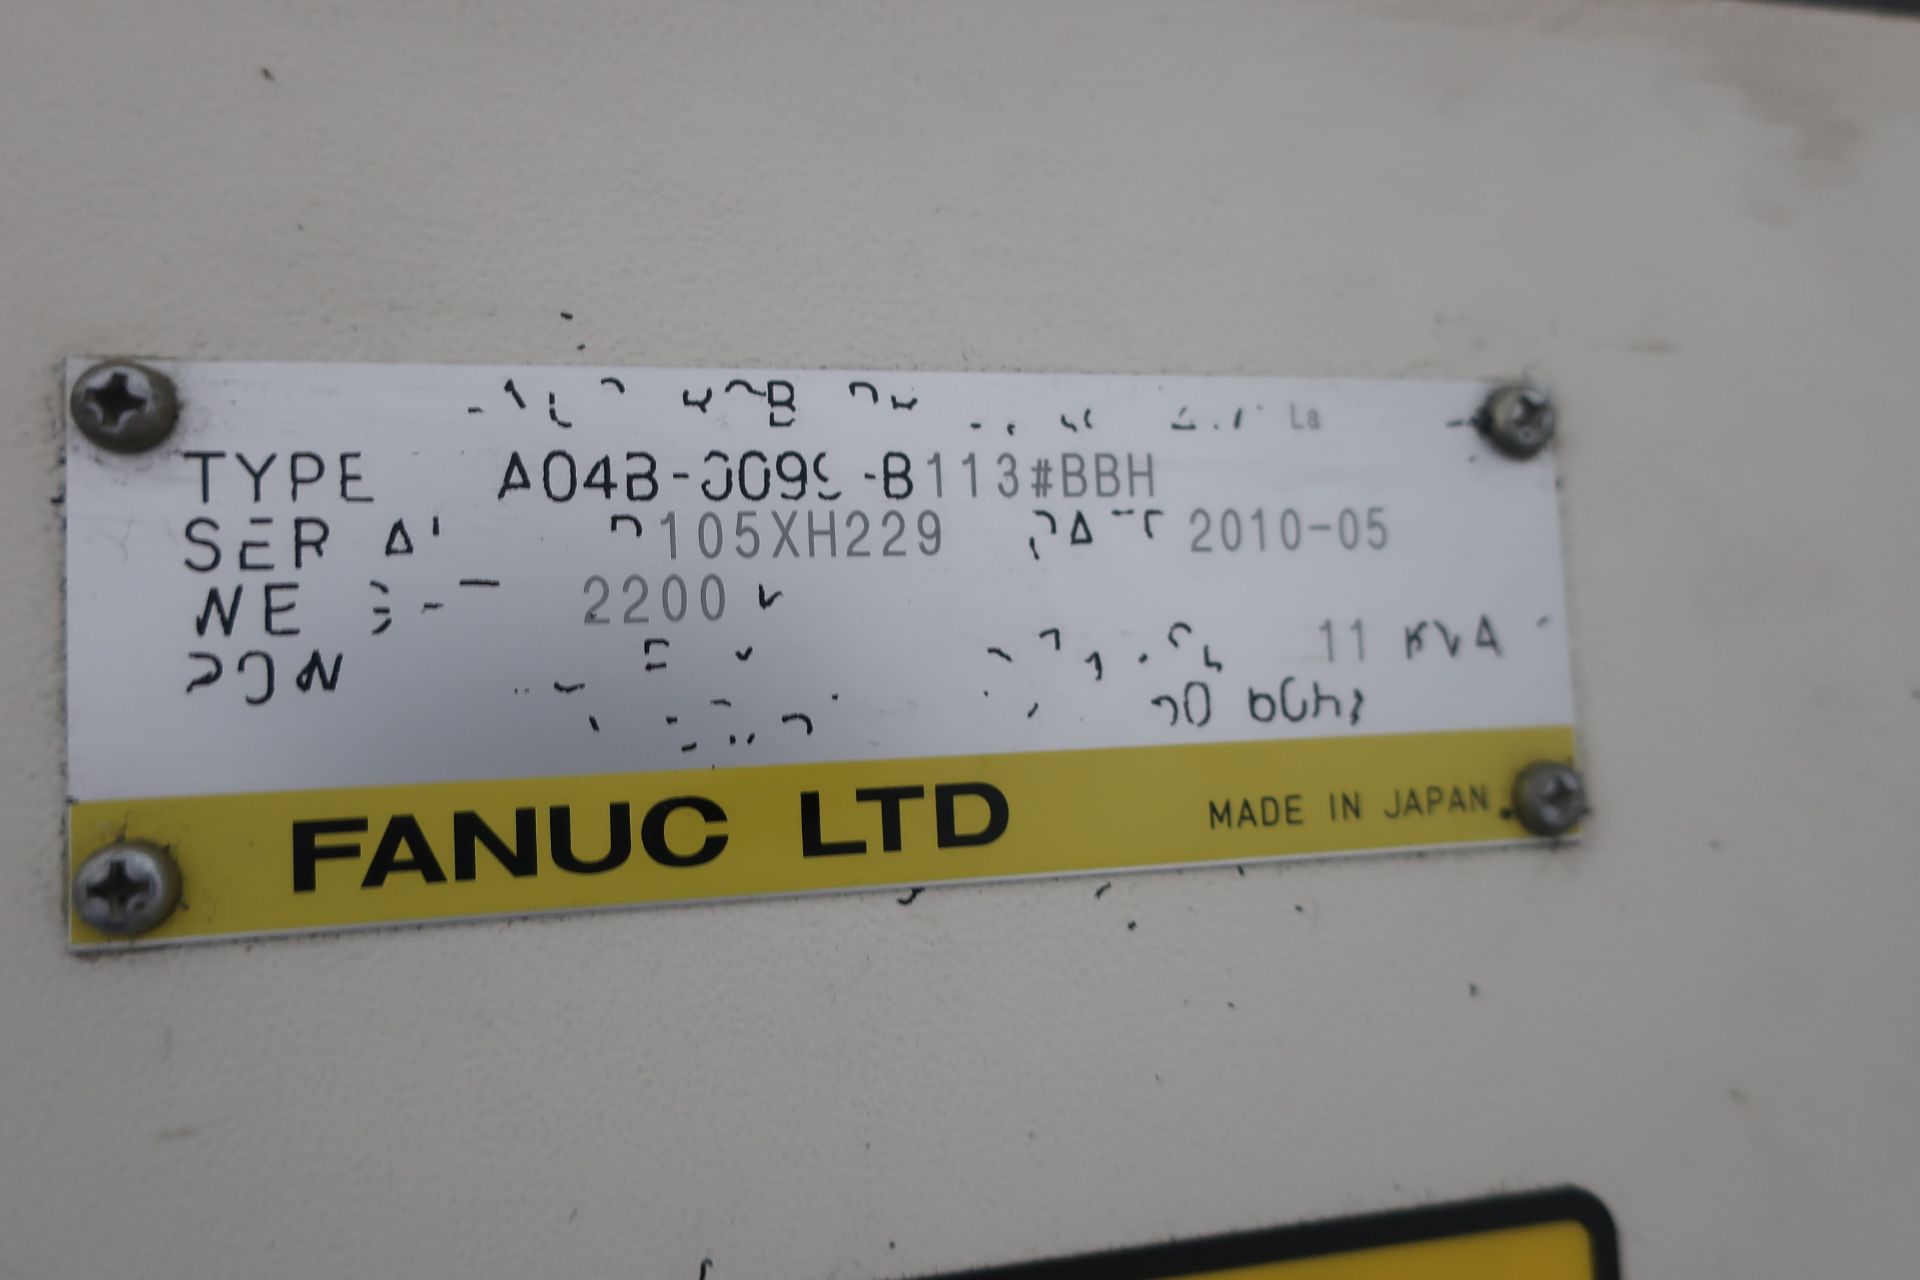 FANUC ROBODRILL ALPHA T21iFLA CNC DRILL TAP VERTICAL MACHINING CENTER, S/N p105xh229 - Image 10 of 10